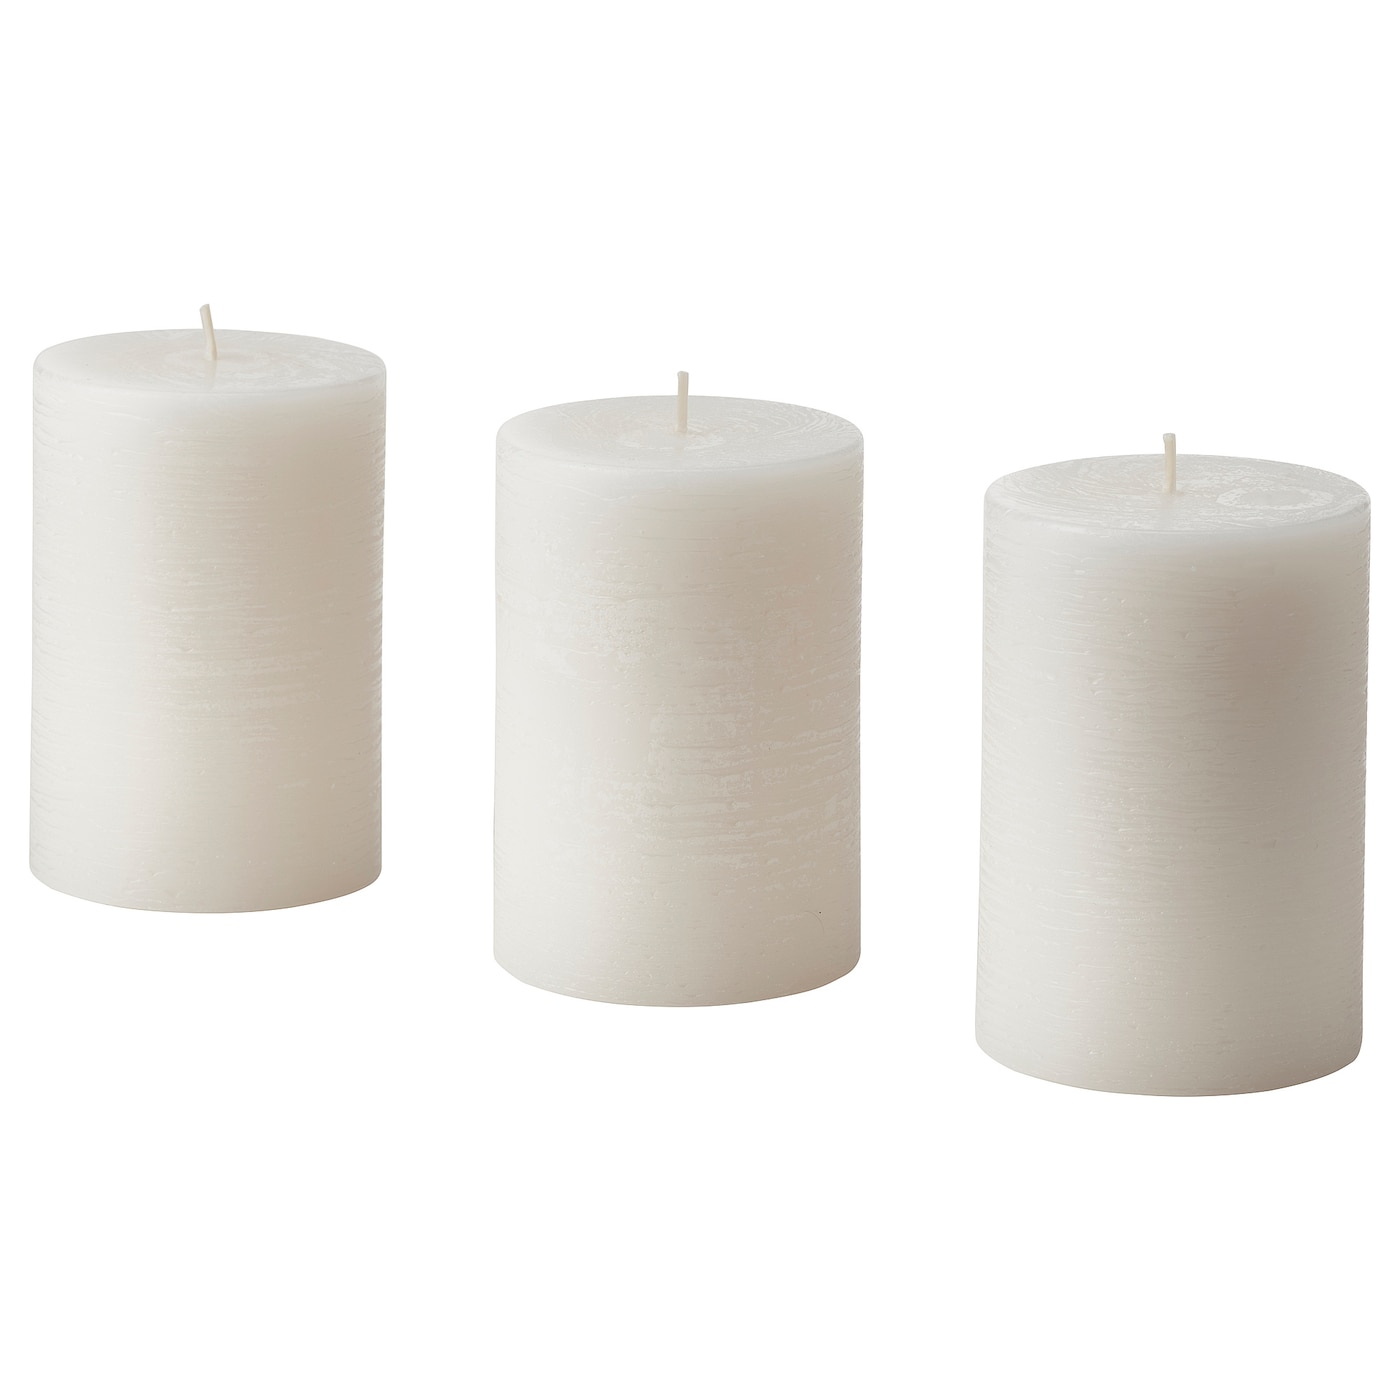 Ароматическя блочная свеча - IKEA ADLAD/АДЛАД ИКЕА, 10х7 см, белый, 3 шт